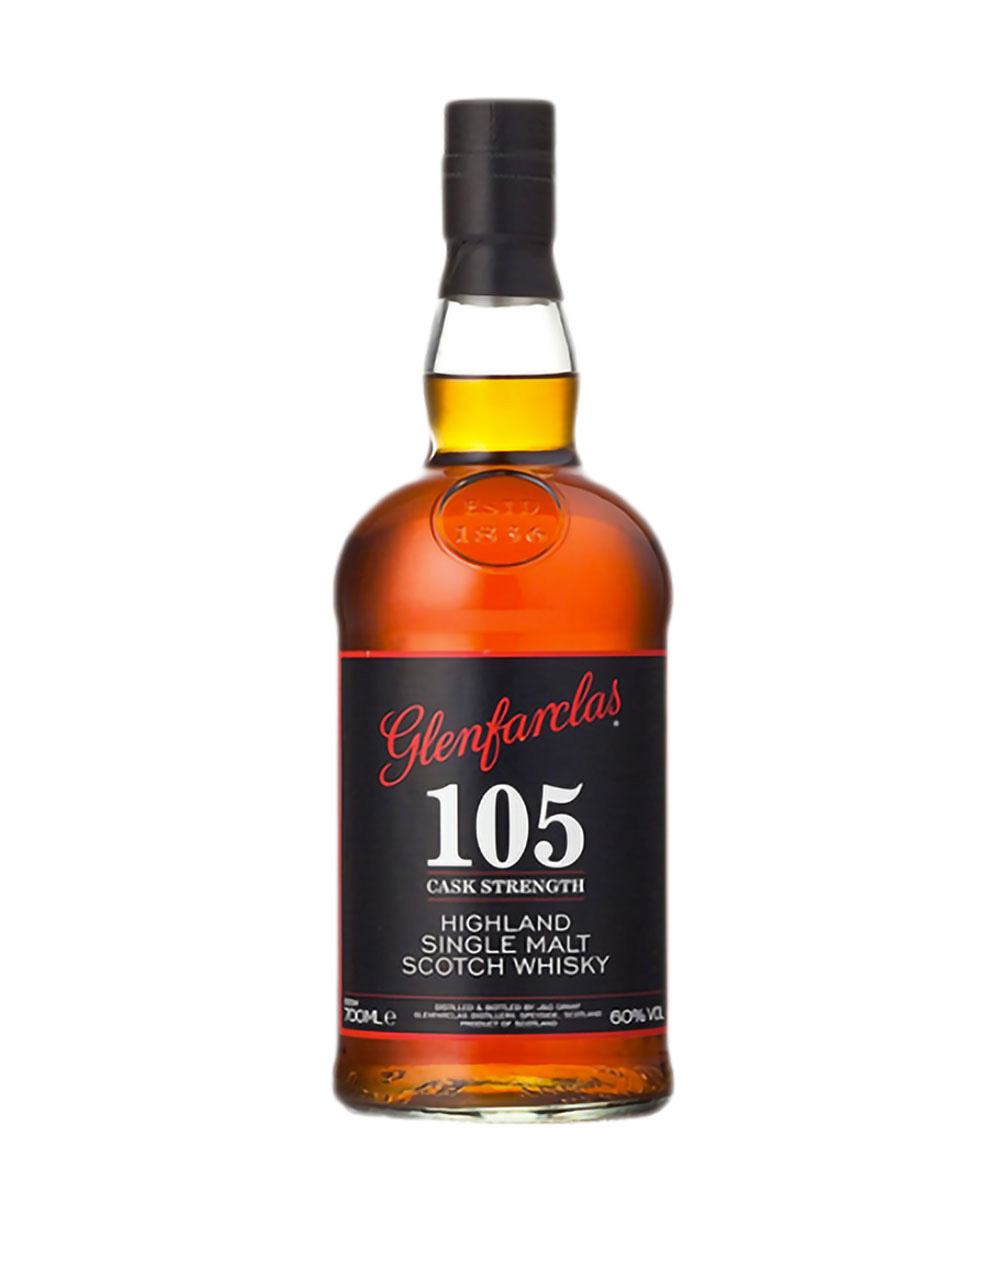 Old Carter Batch 5 Straight Bourbon Whiskey